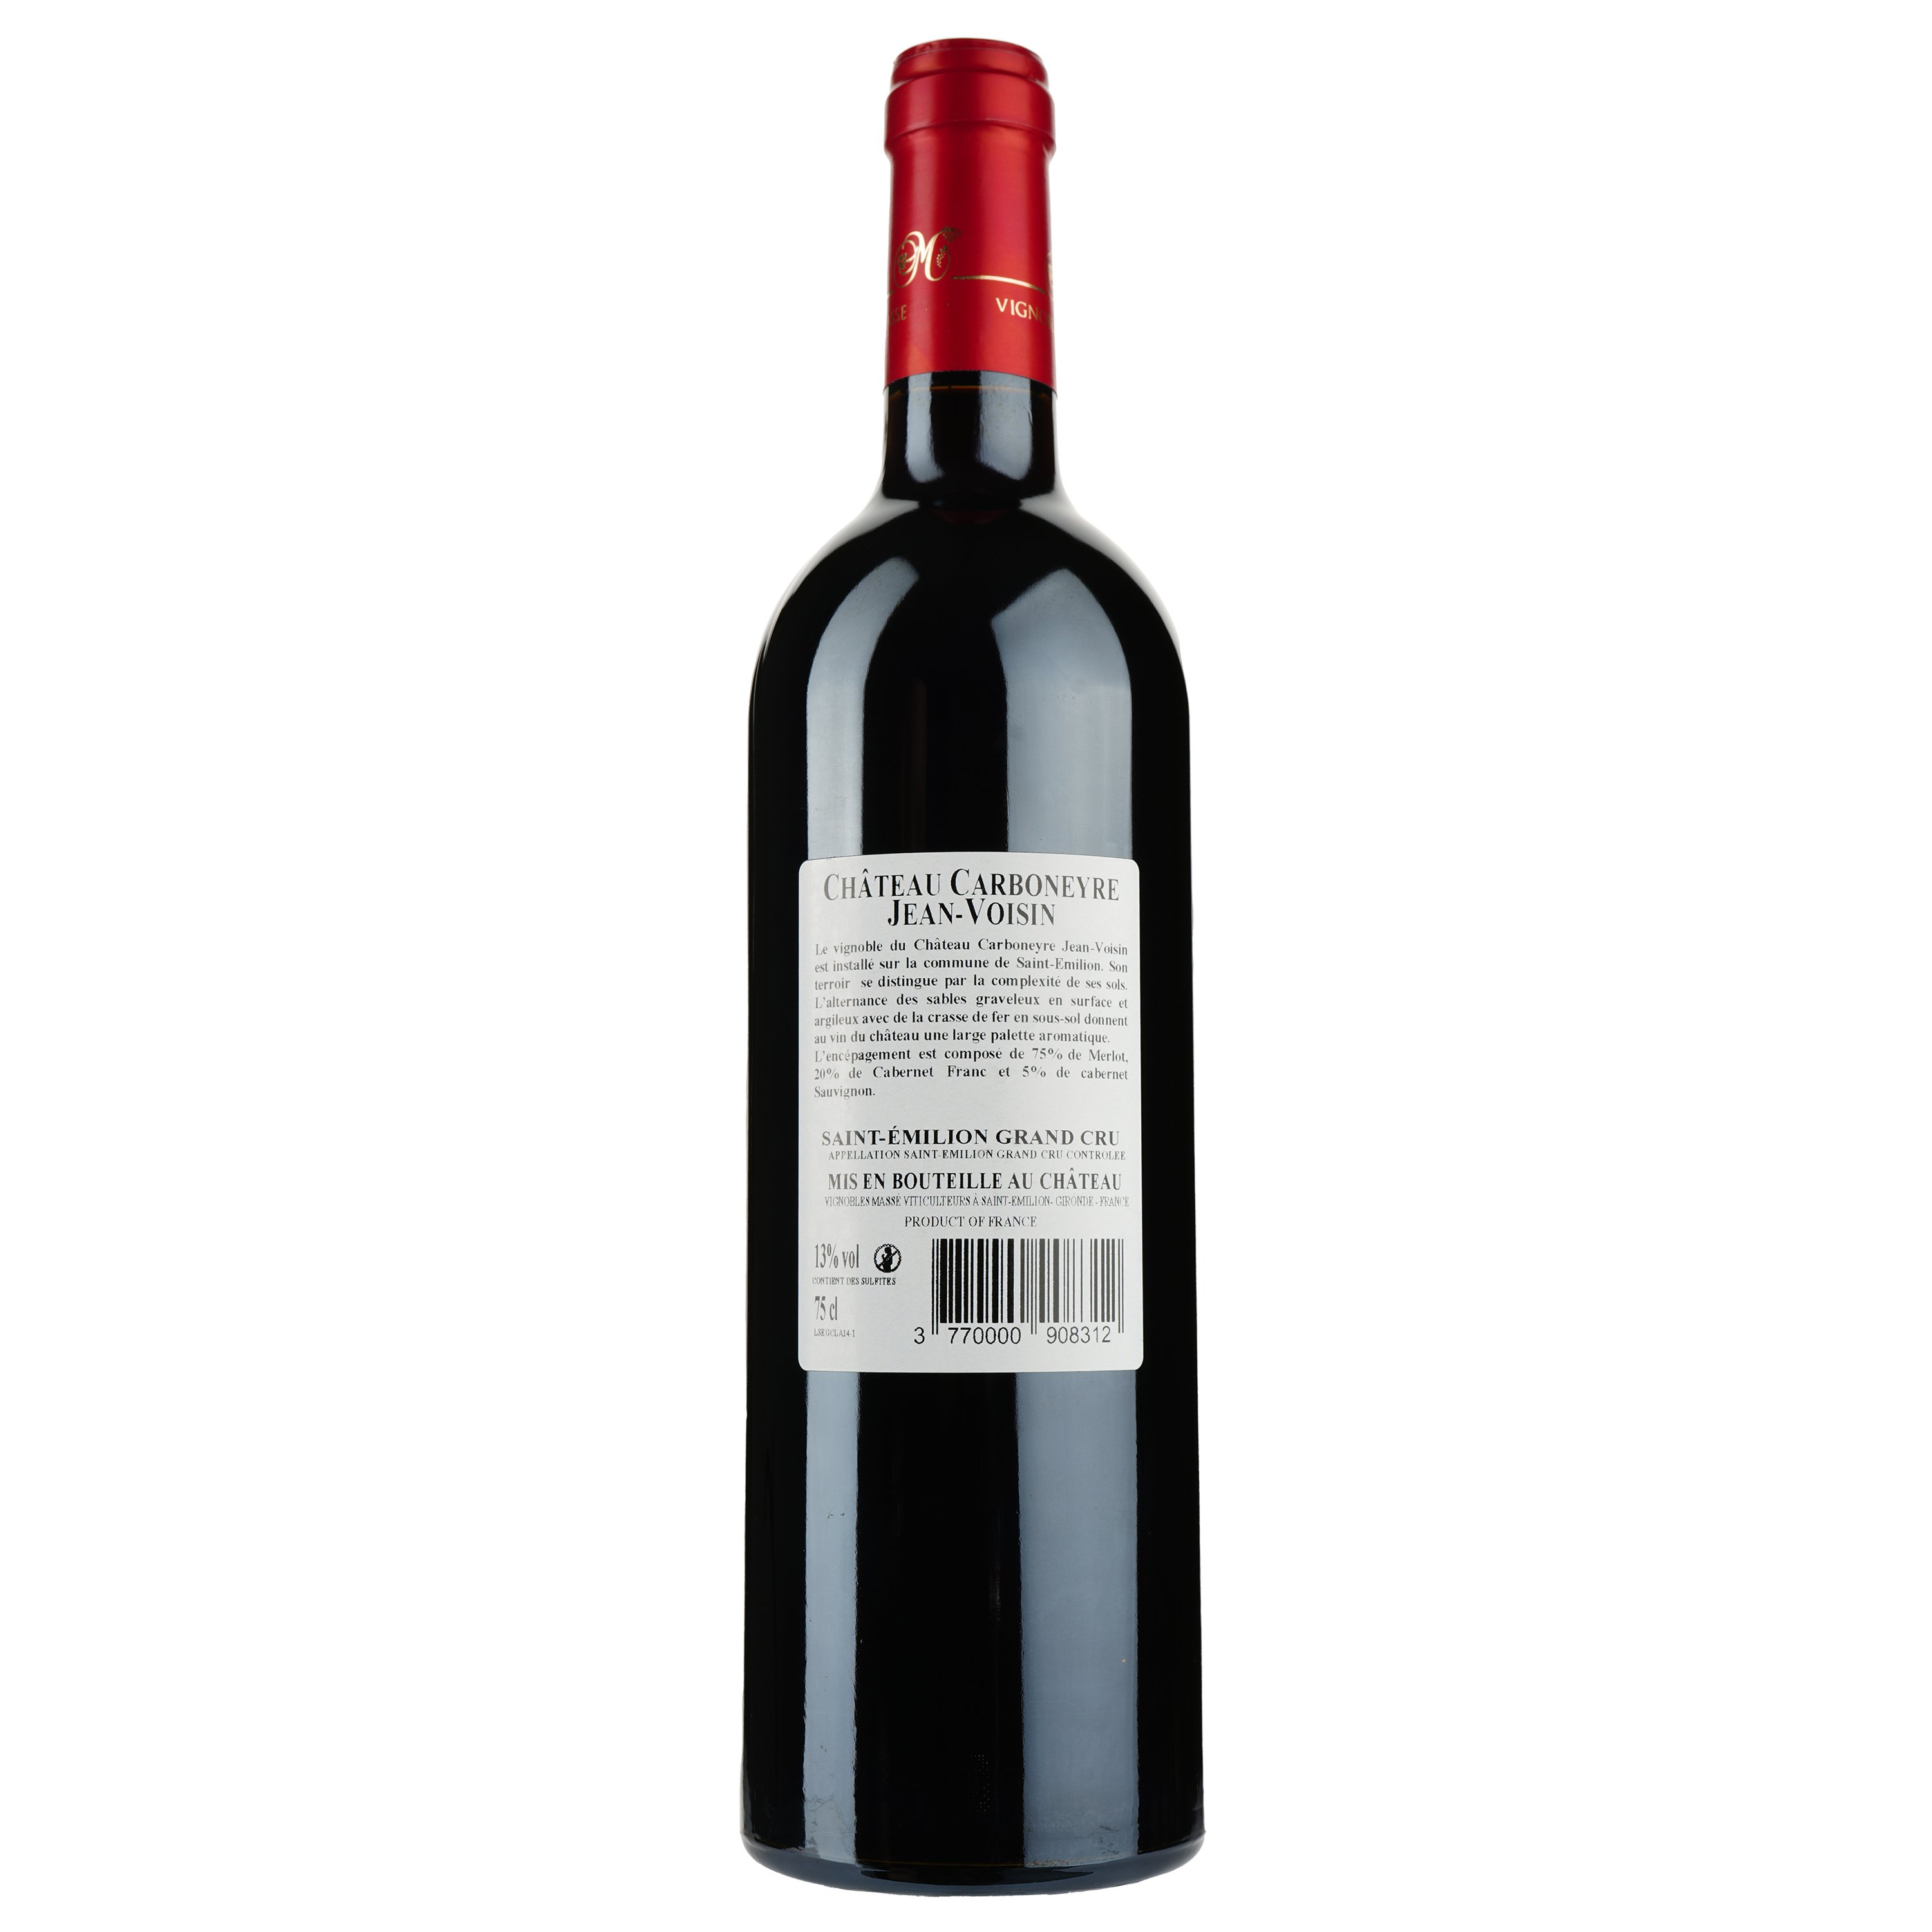 Вино Chateau Carboneyre Jean-Voisin AOP Saint-Emilion Grand Cru 2014, красное, сухое, 0,75 л - фото 2